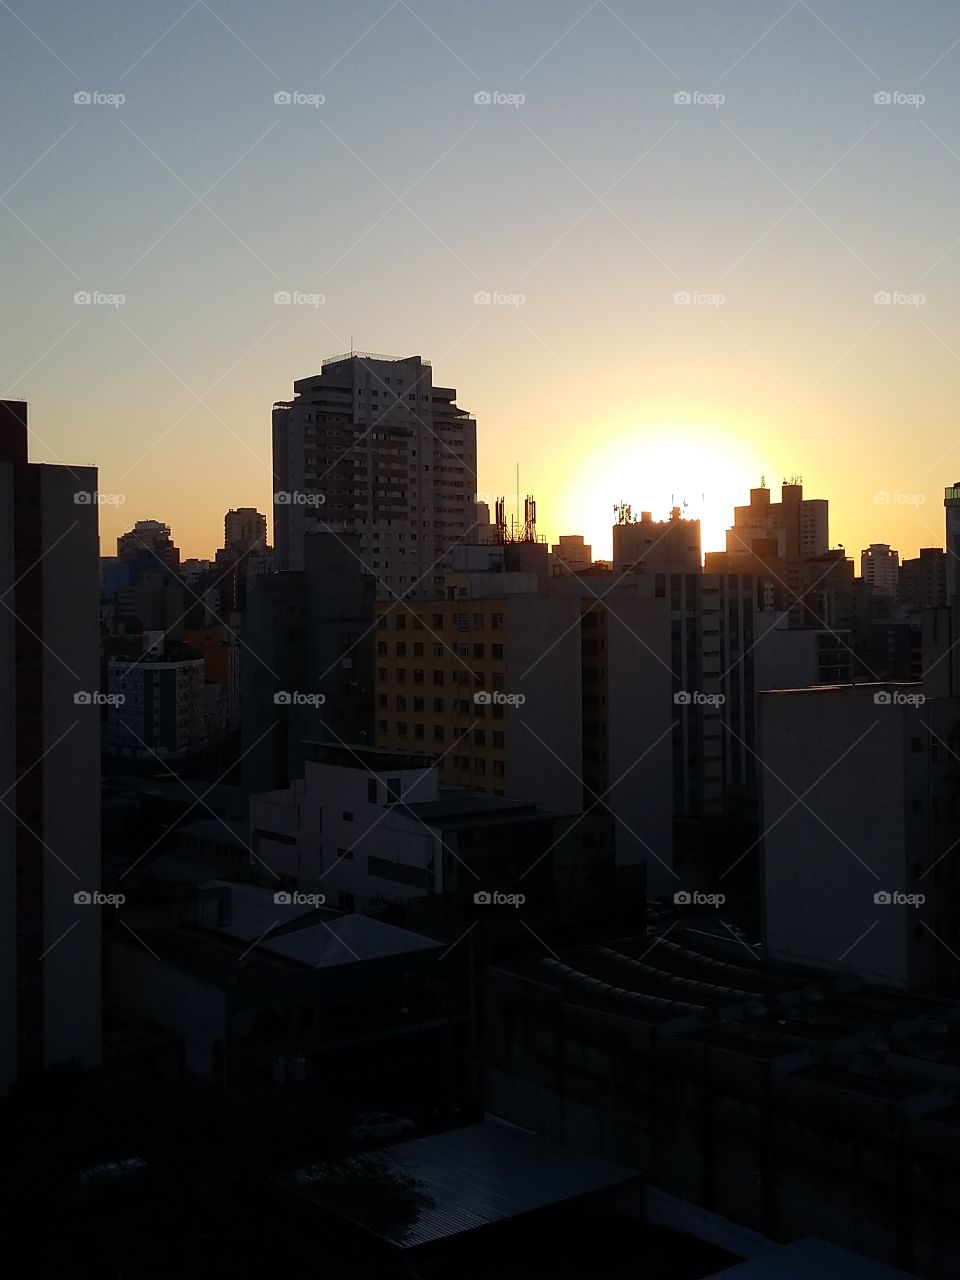 São Paulo...going dark.